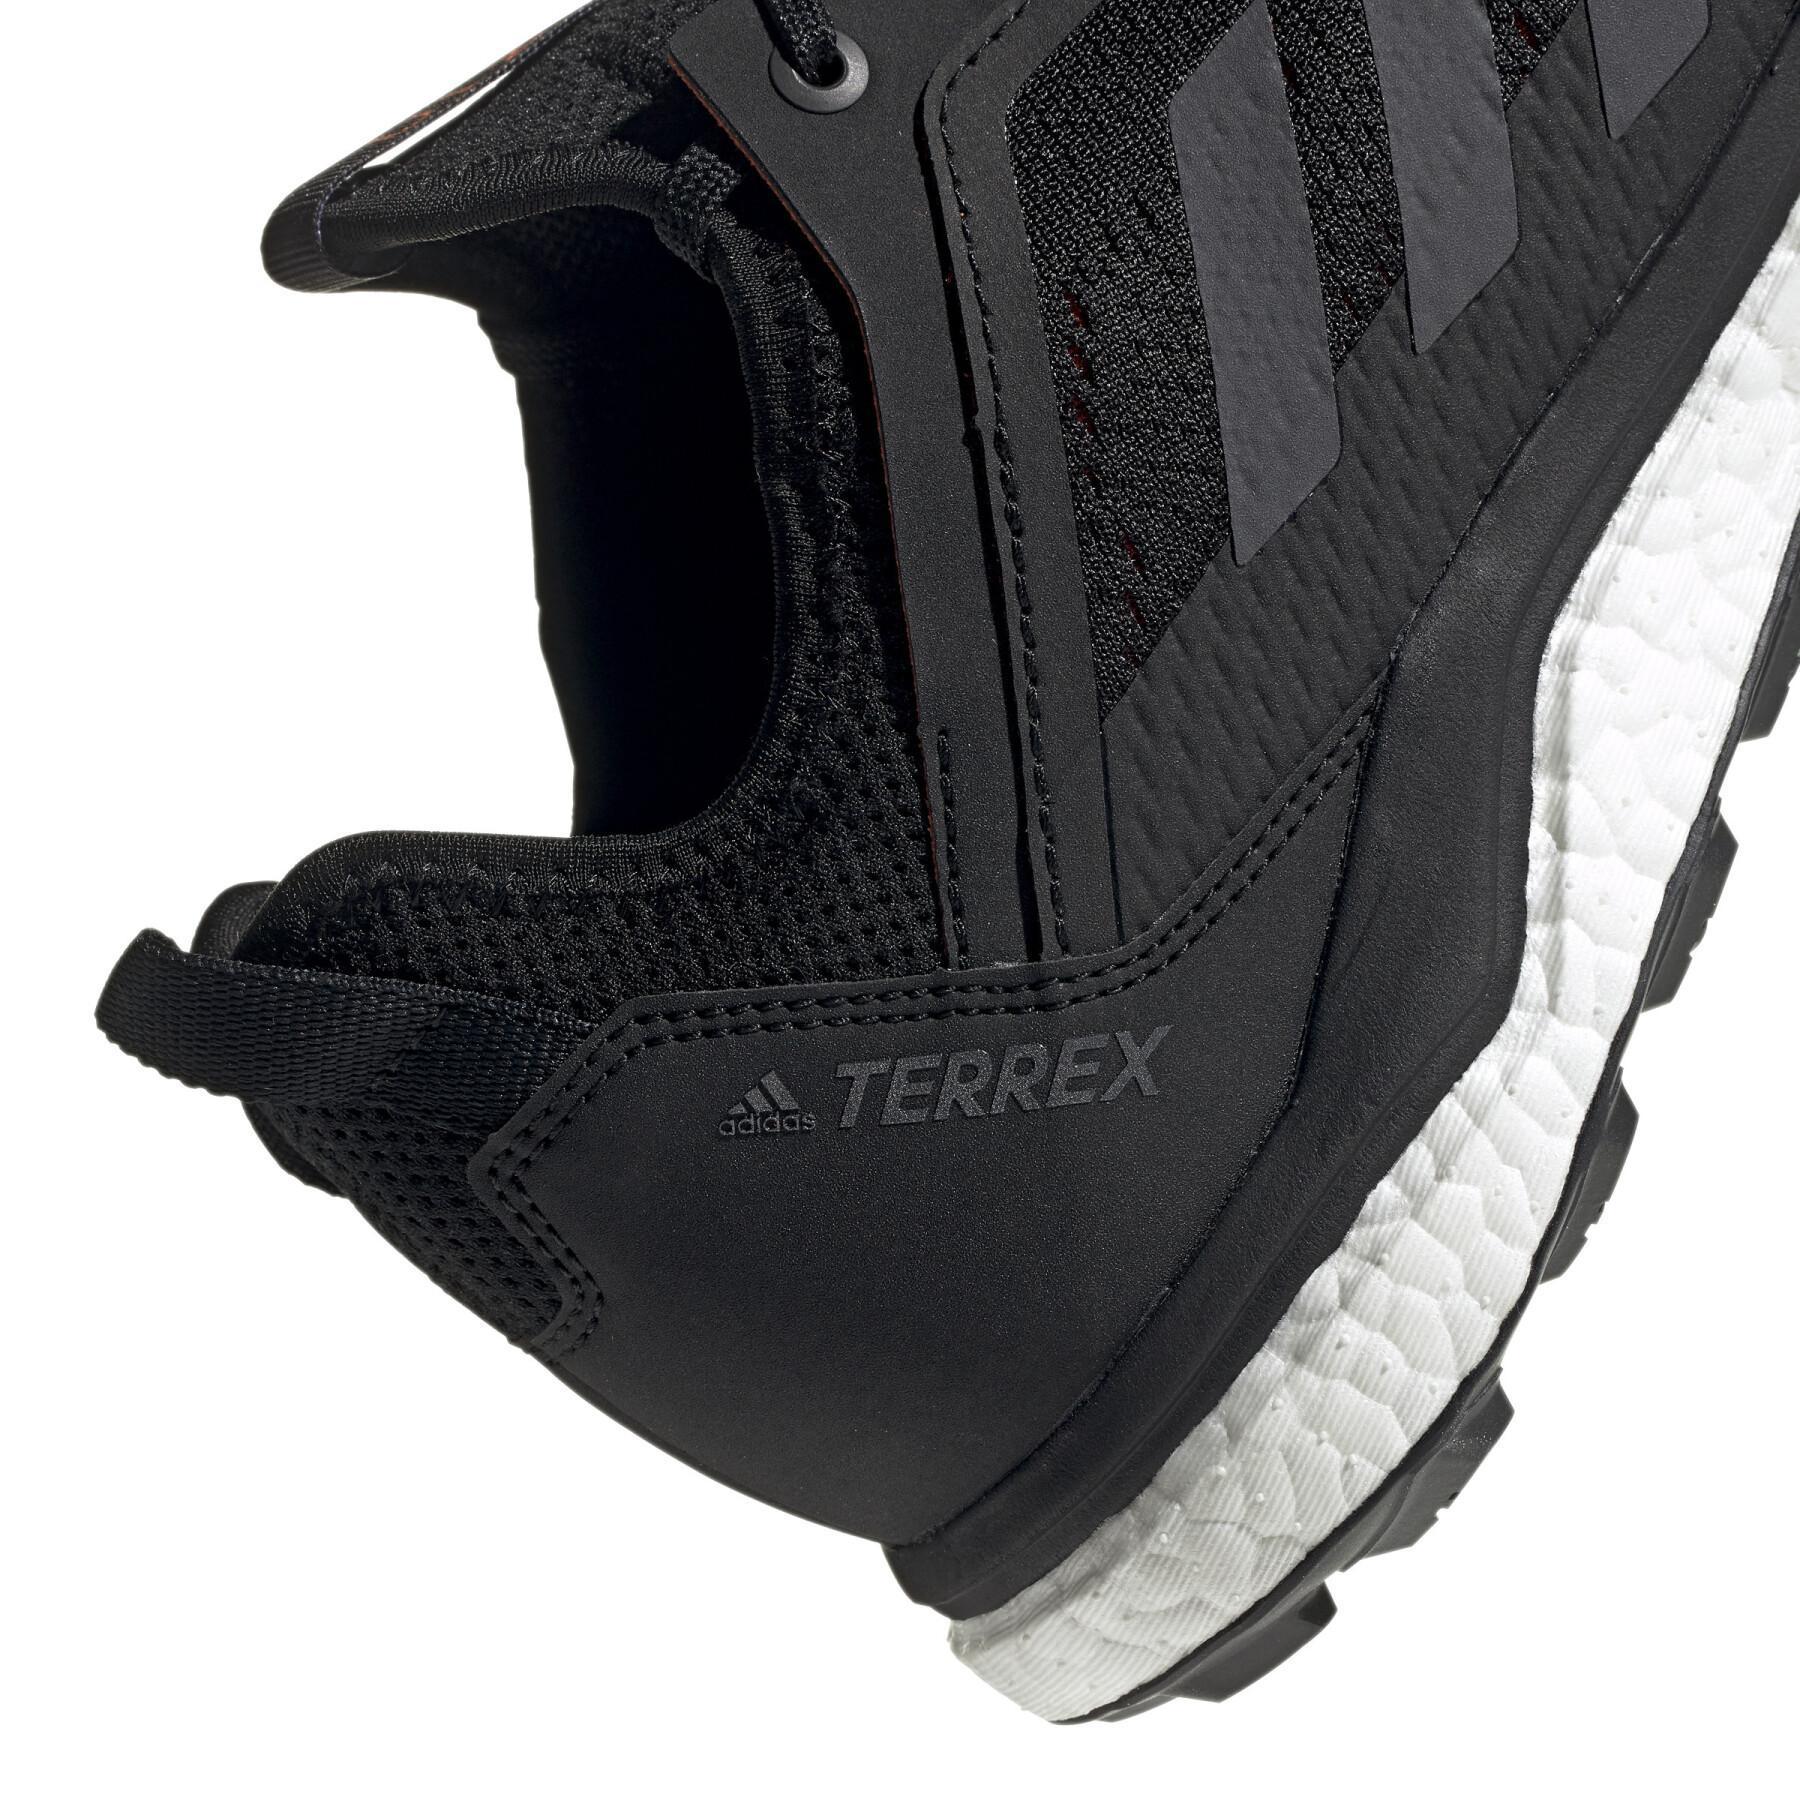 Trailrunning-Schuhe adidas Terrex Agravic Flow